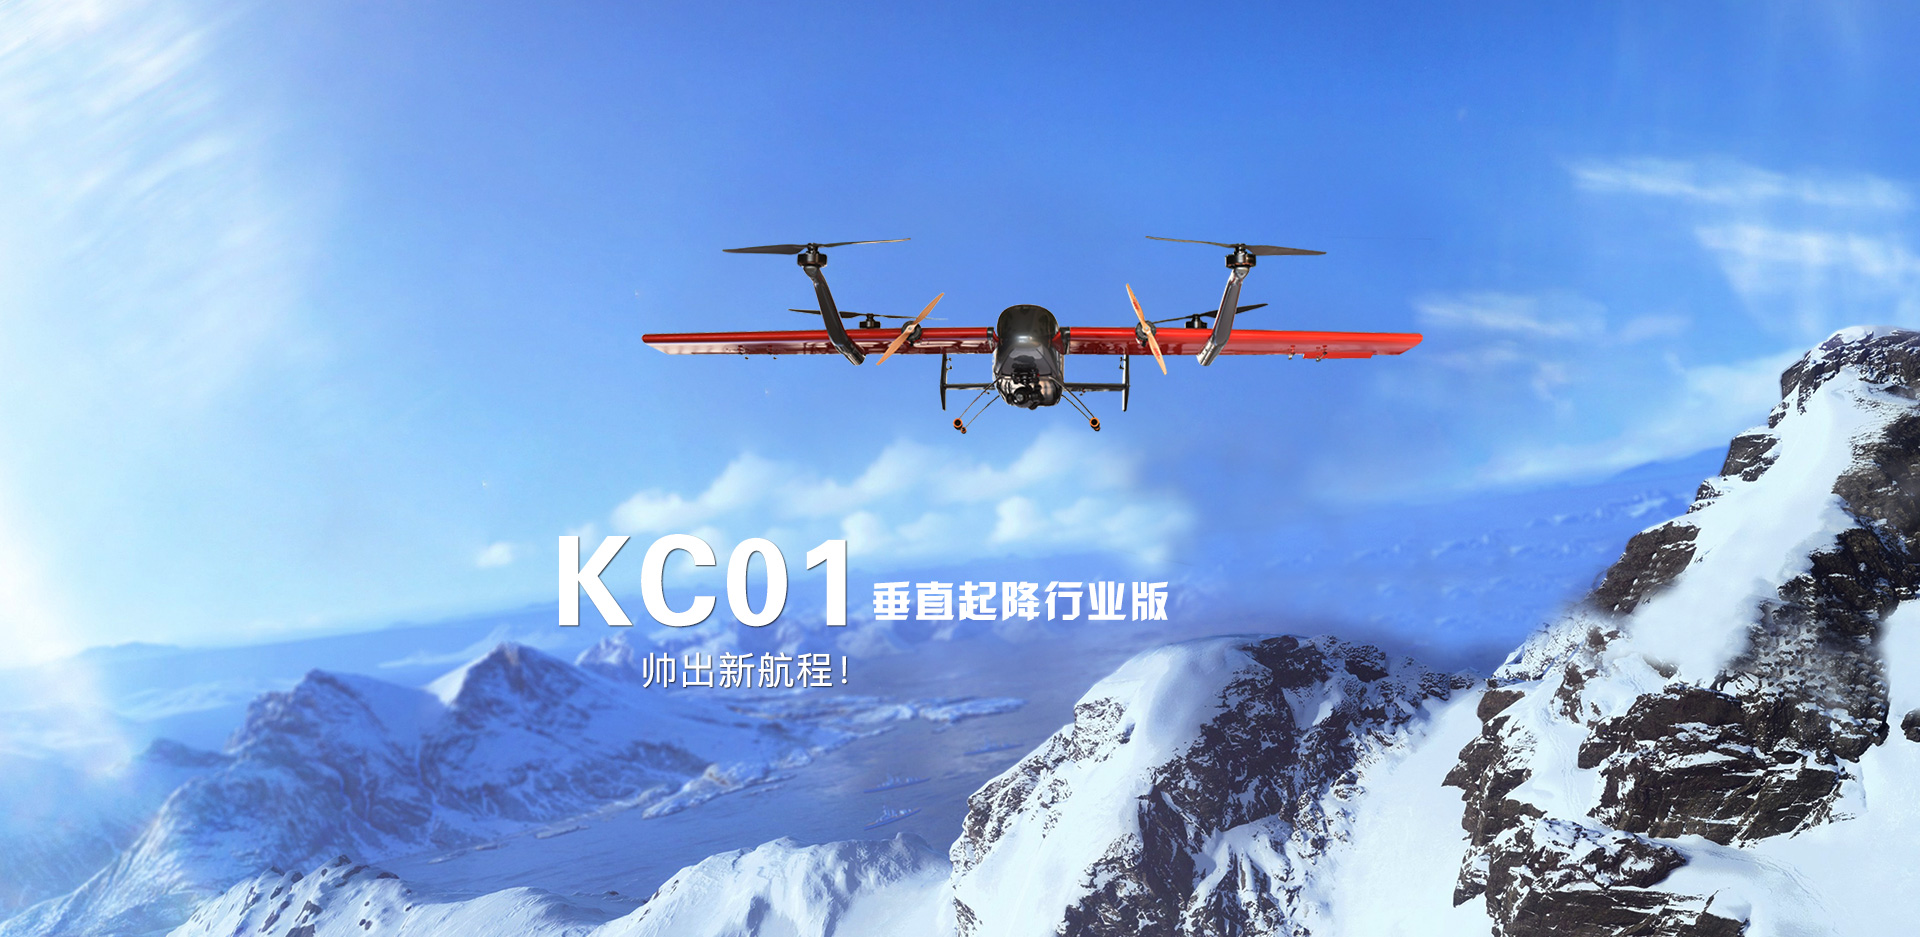 KC01 垂直起降固定翼无人机